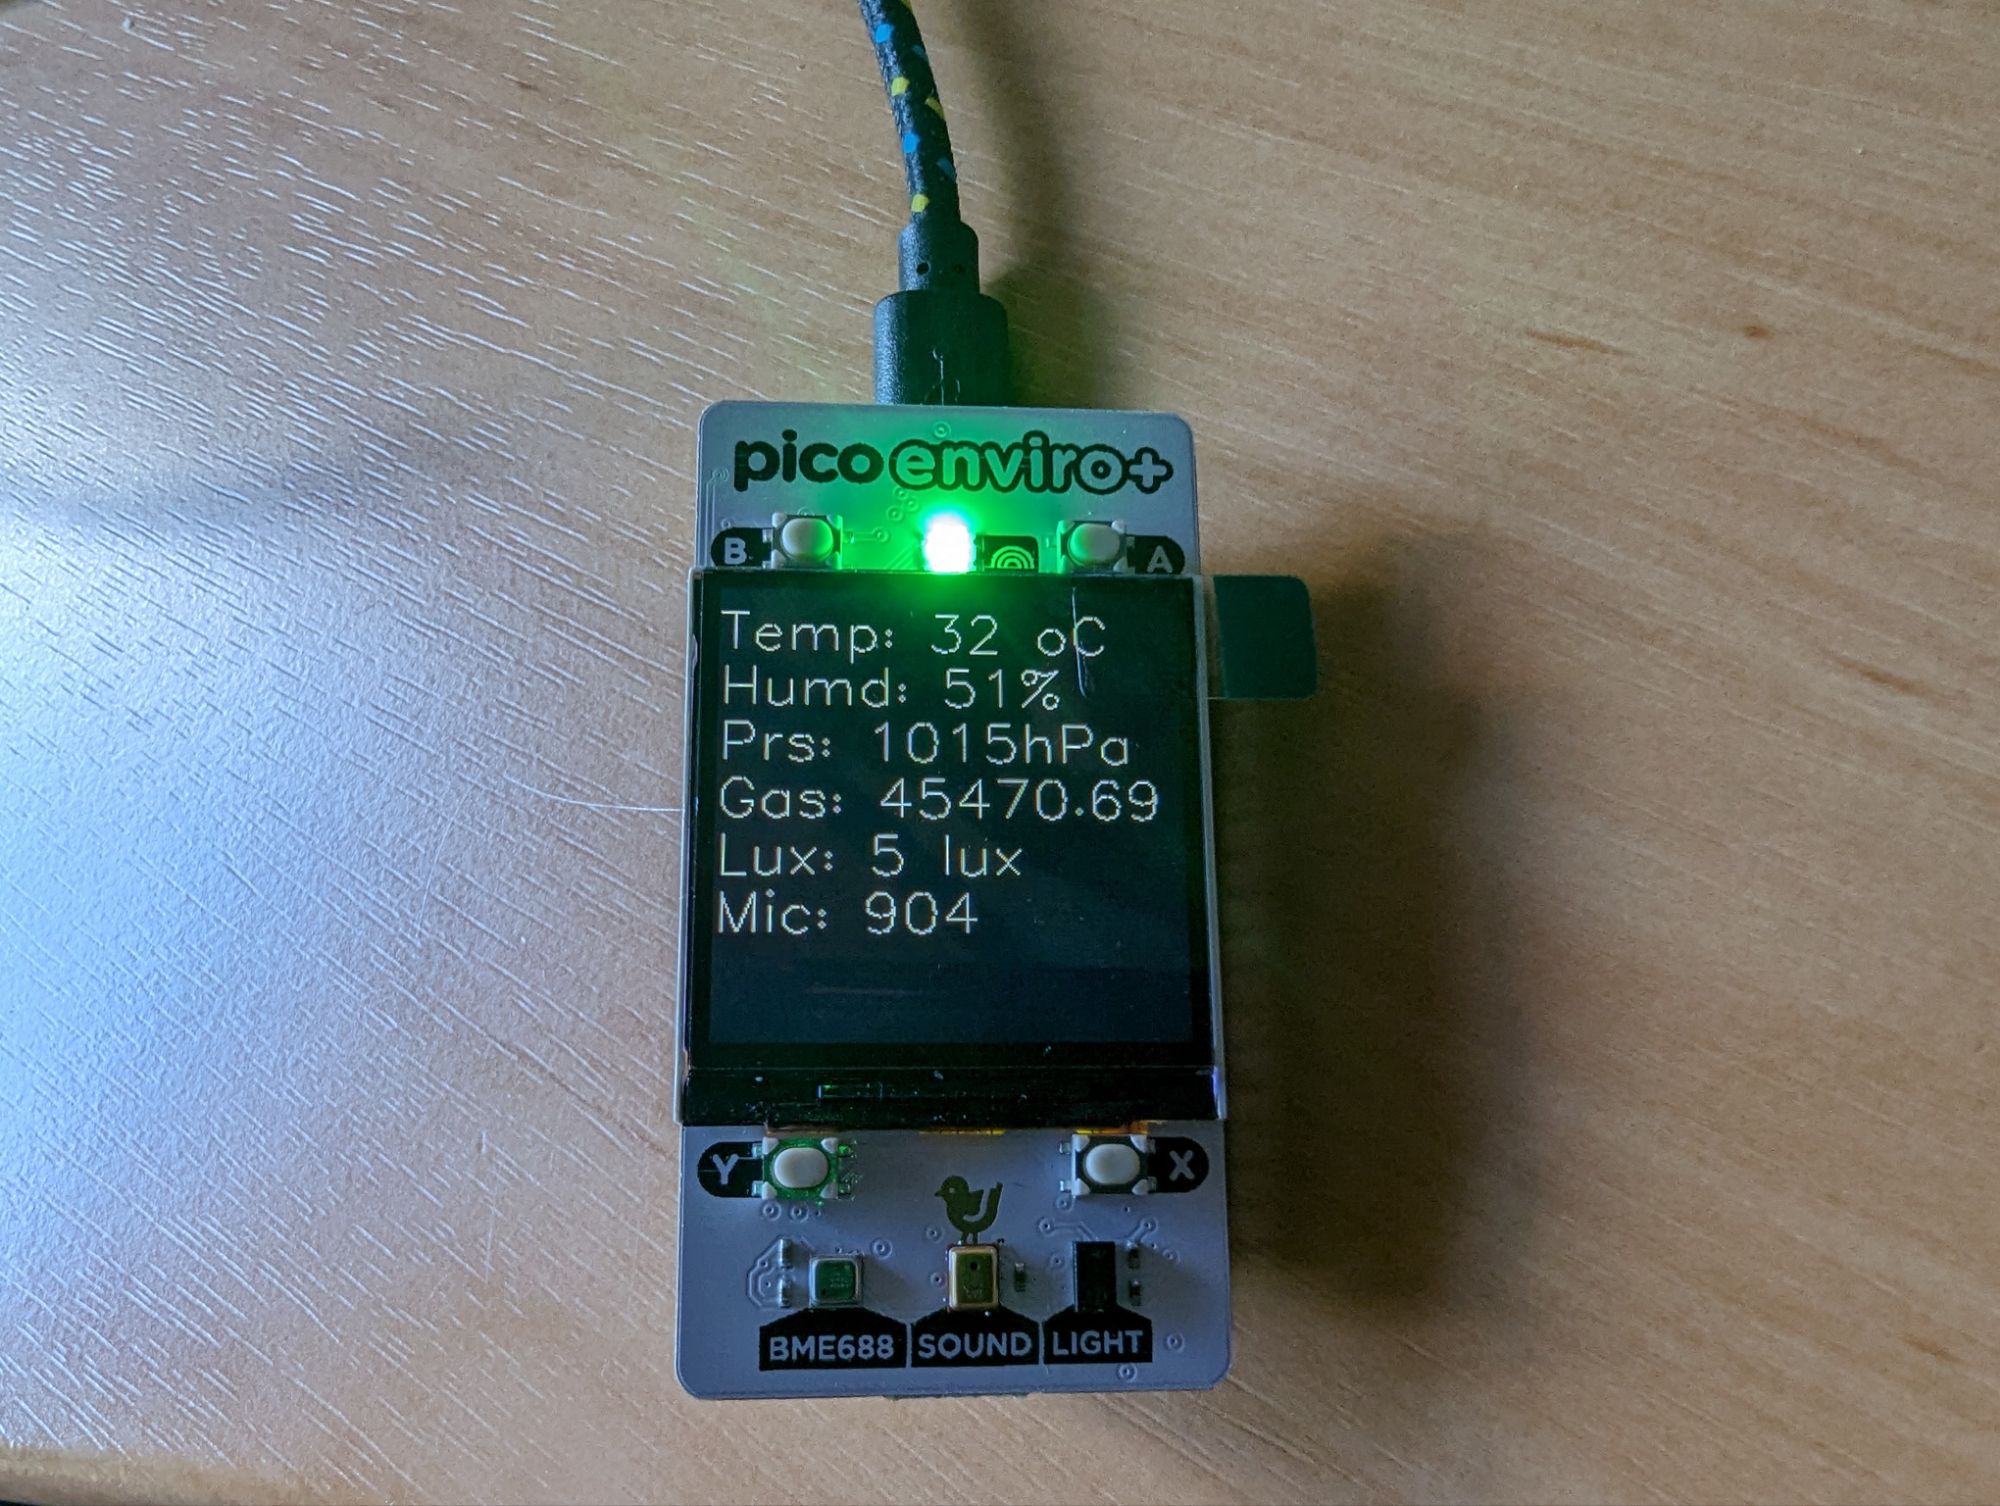 PIMORONI pico enviro+ with measurements on the screen.